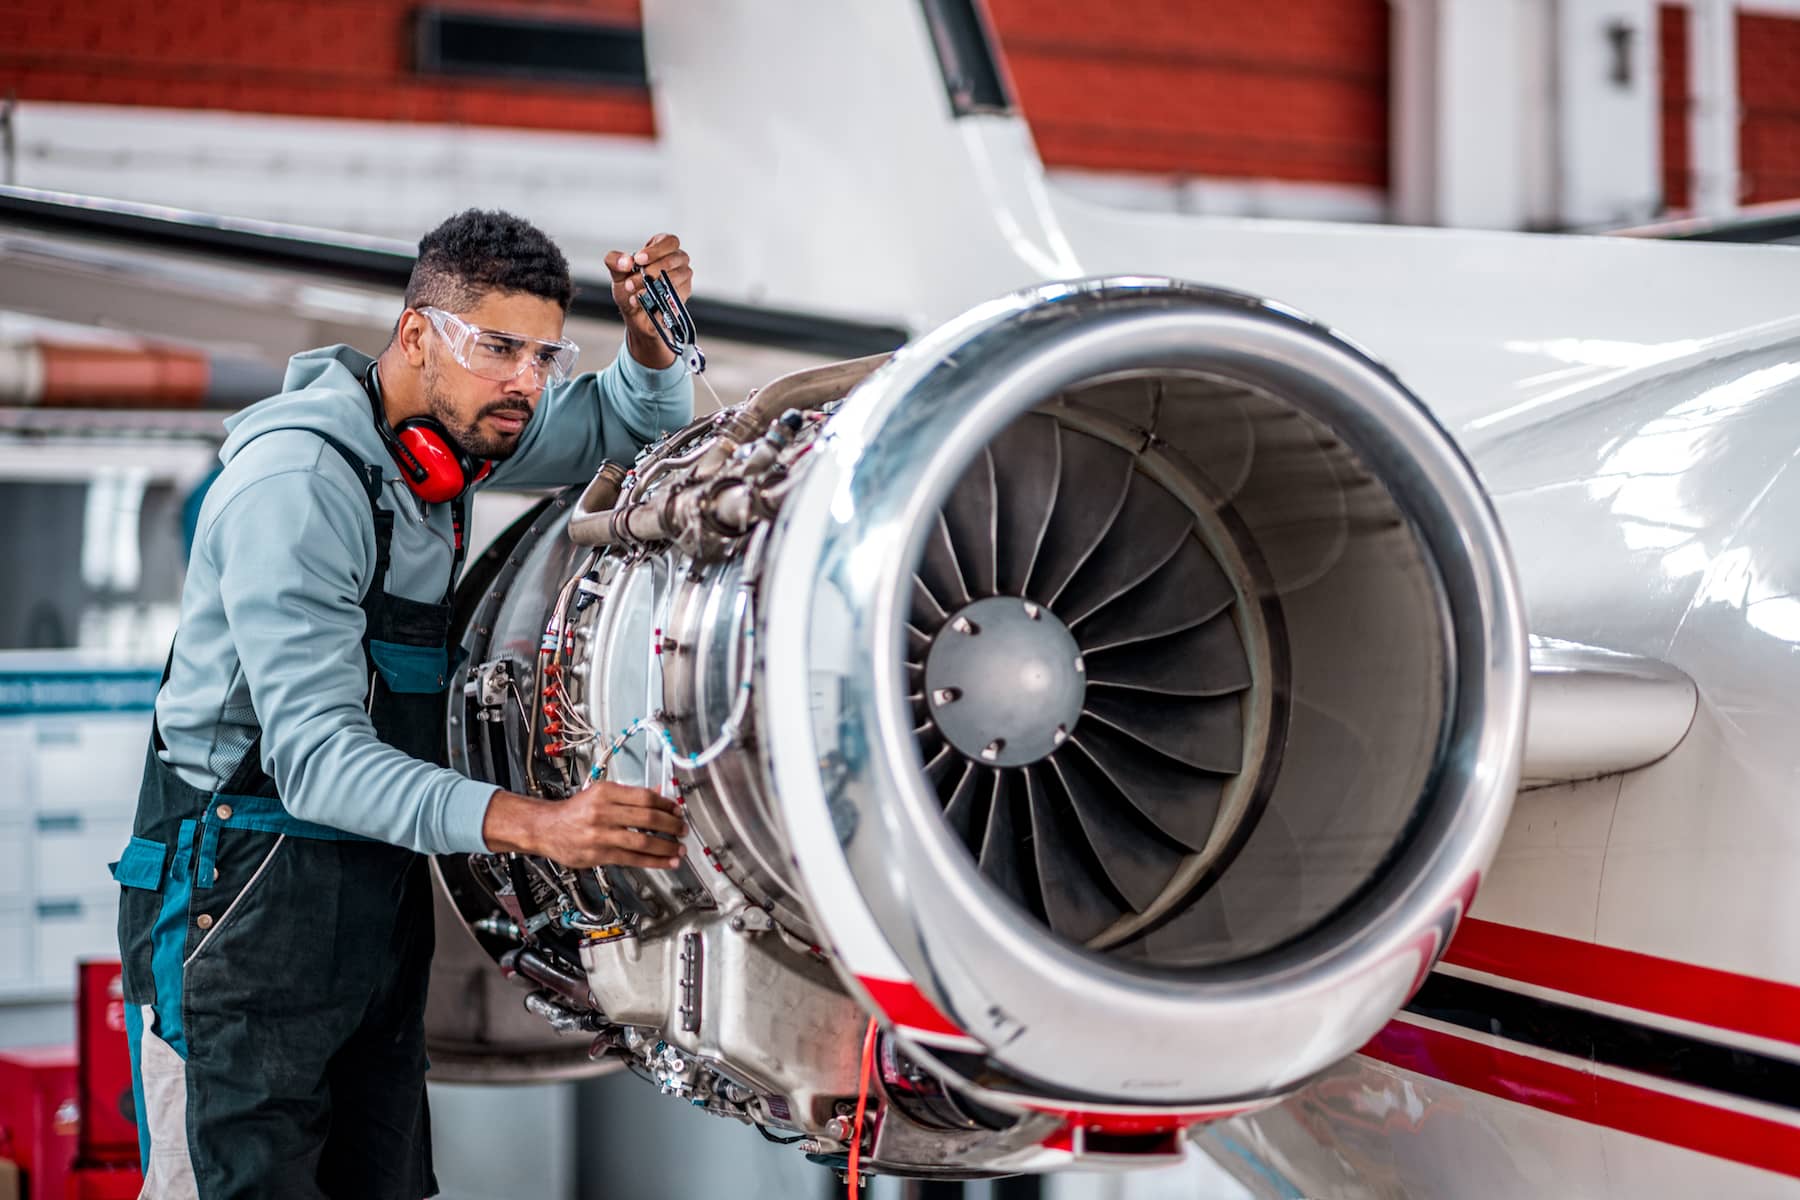 Aerospace technician with a turbine engine